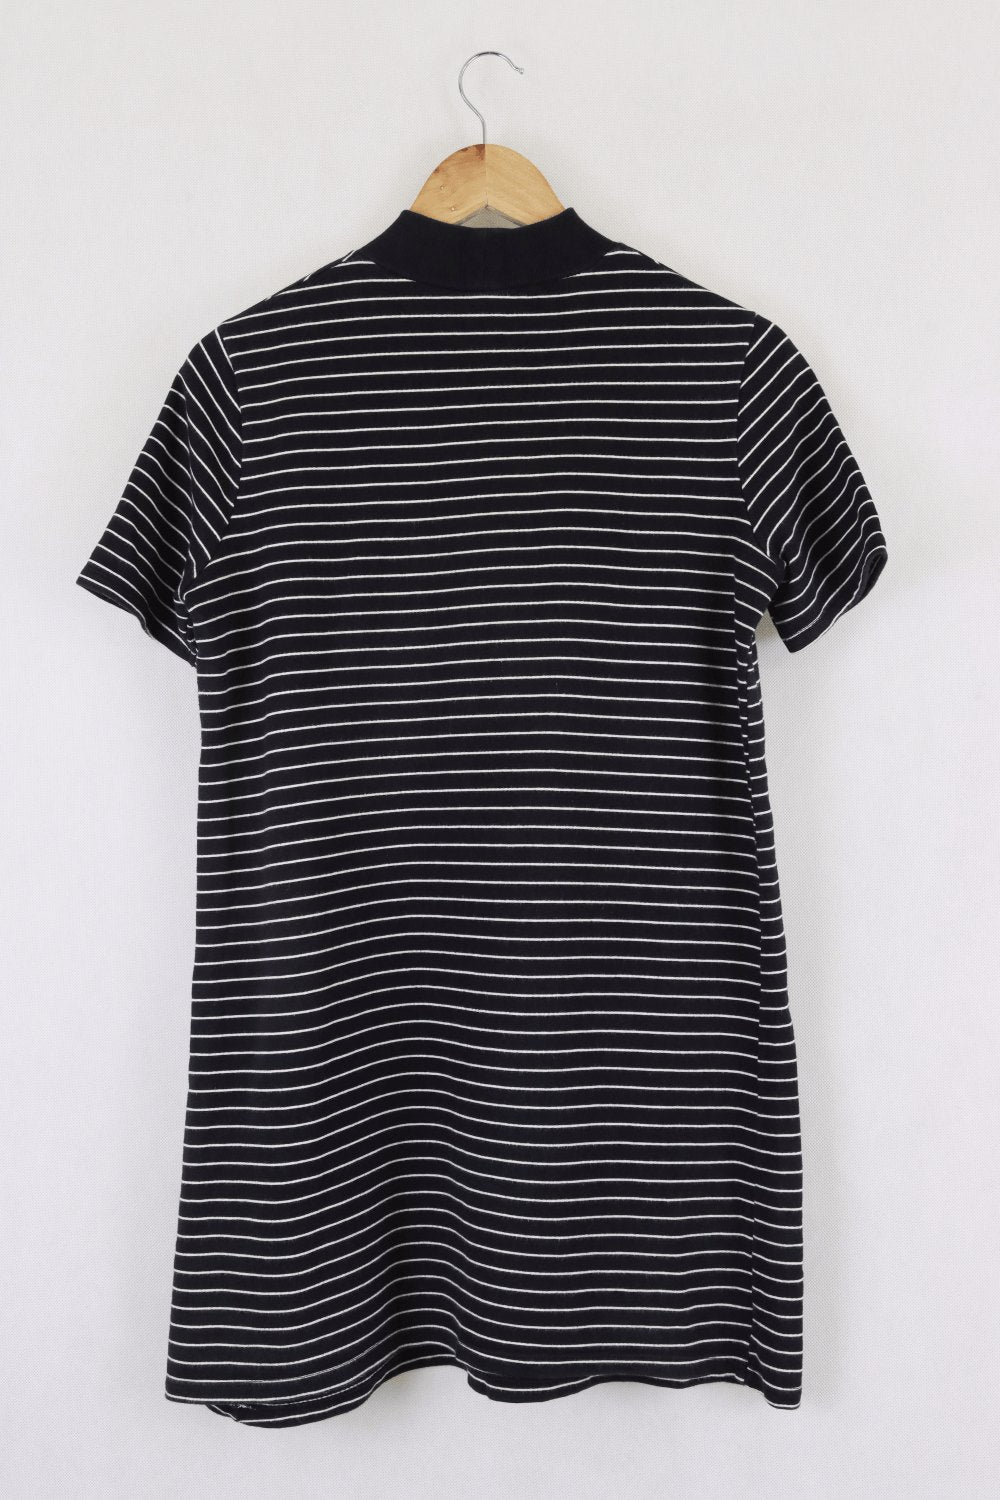 Zara Black And White Striped Shirt Dress M